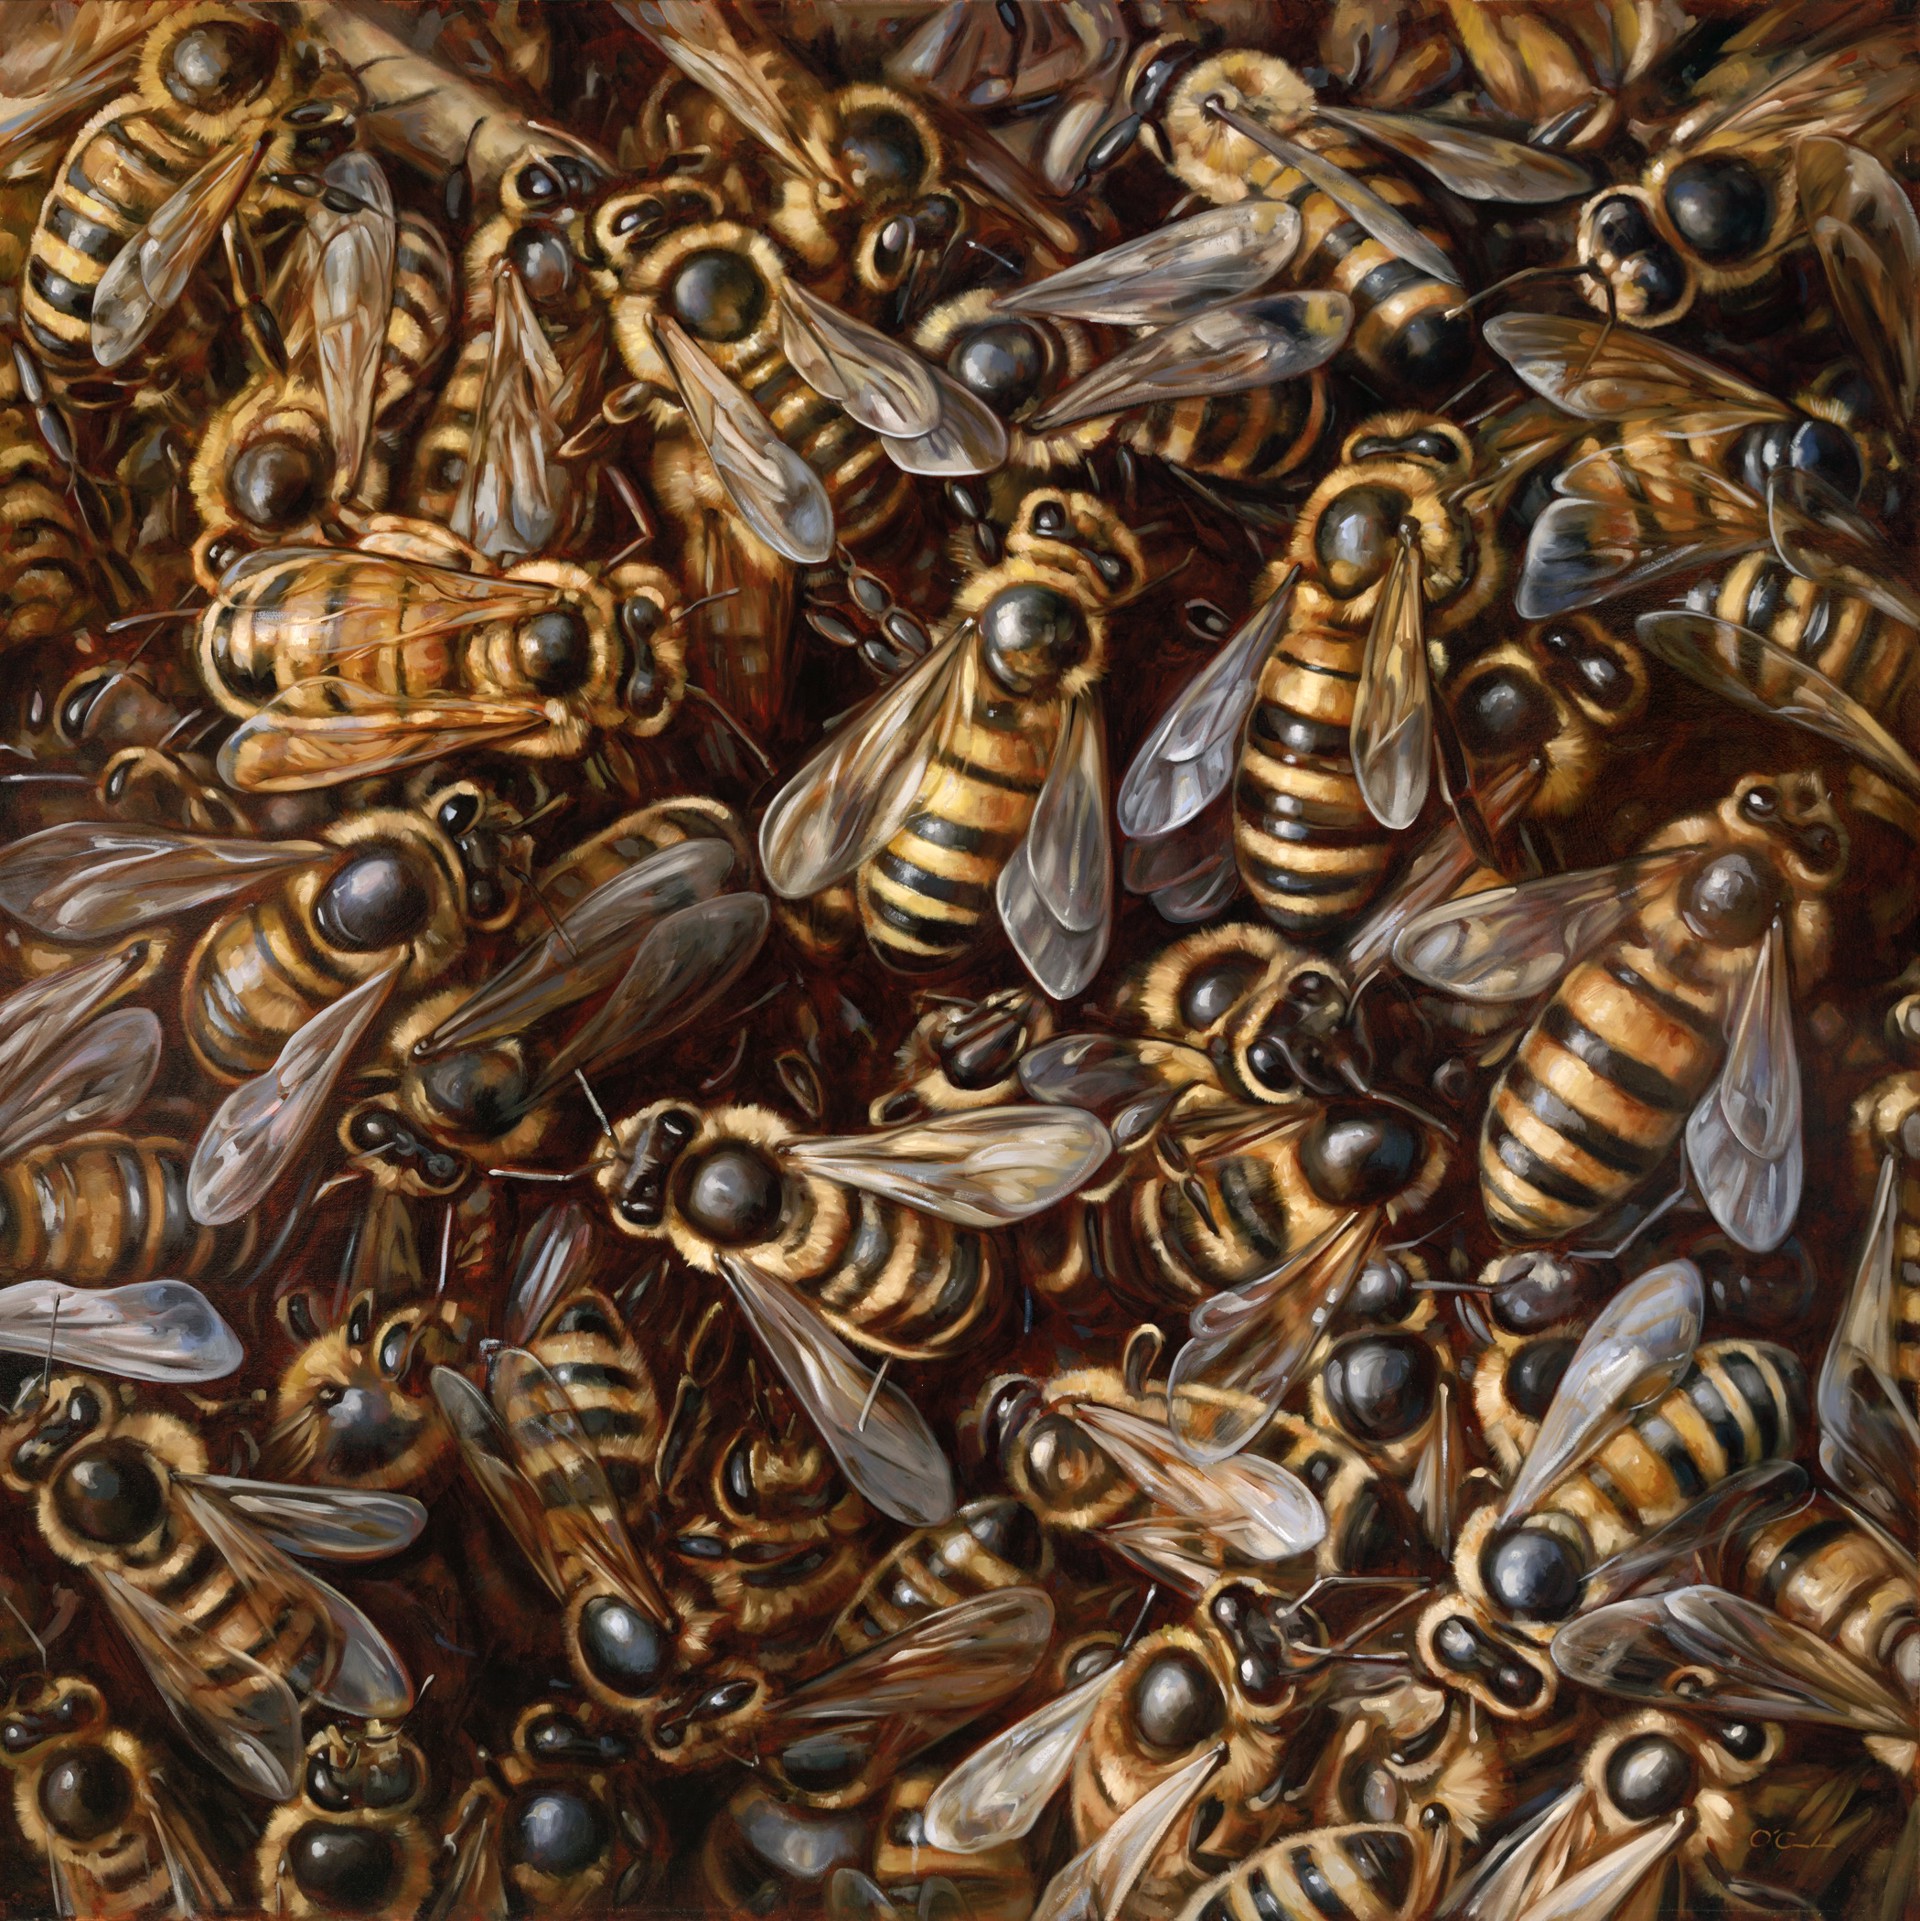 A Bee Sea by Jennifer O'Cualain